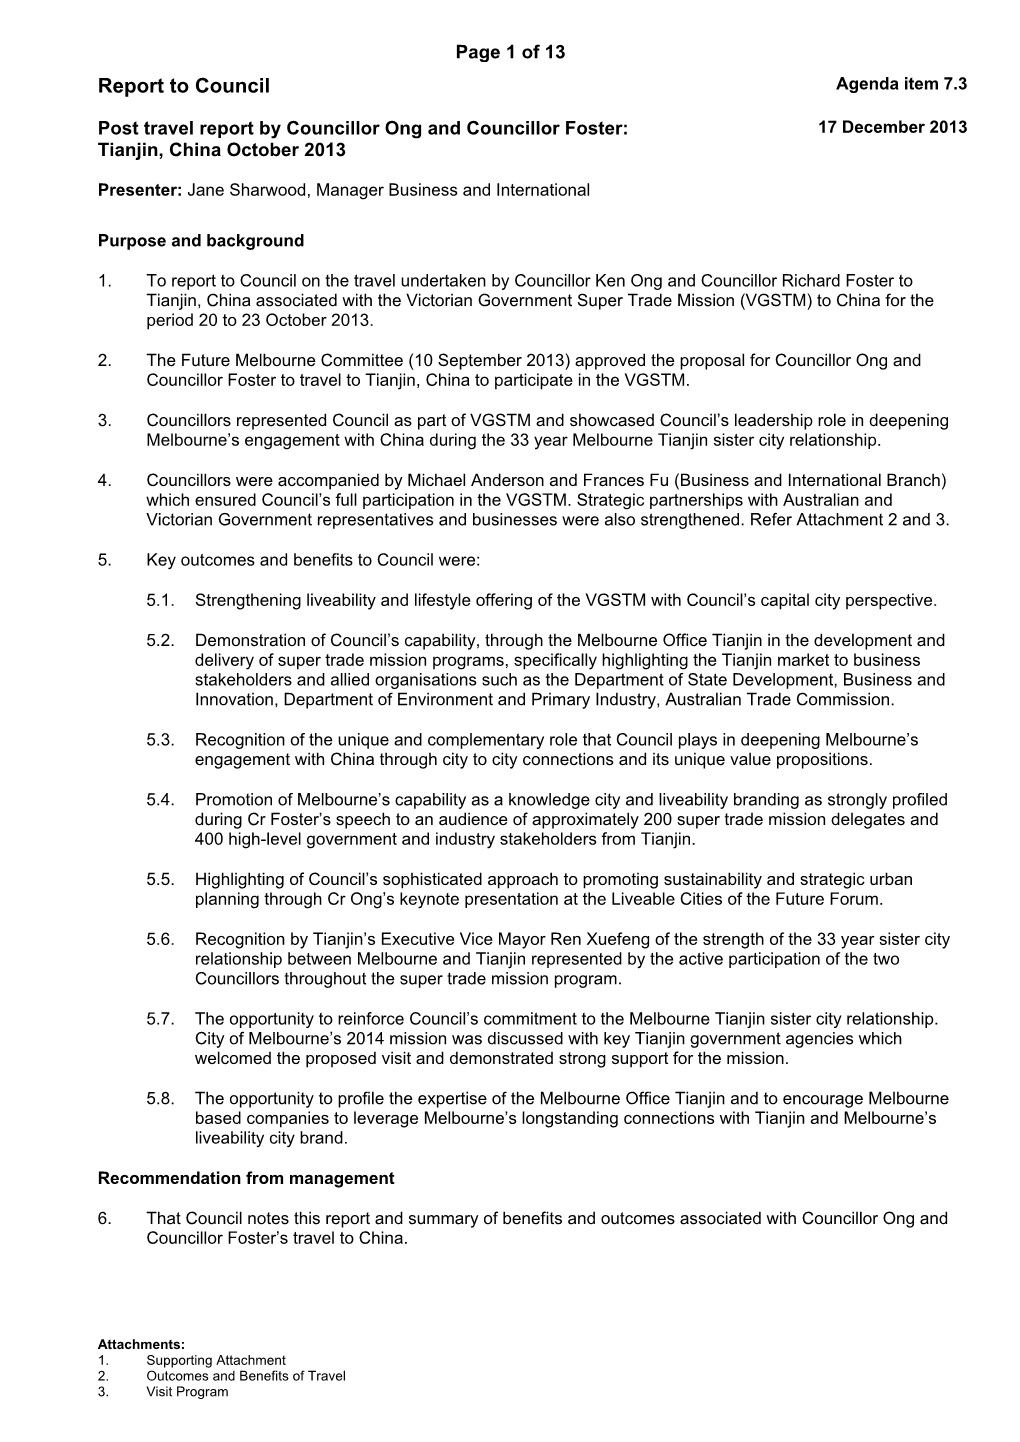 Report to Council Agenda Item 7.3